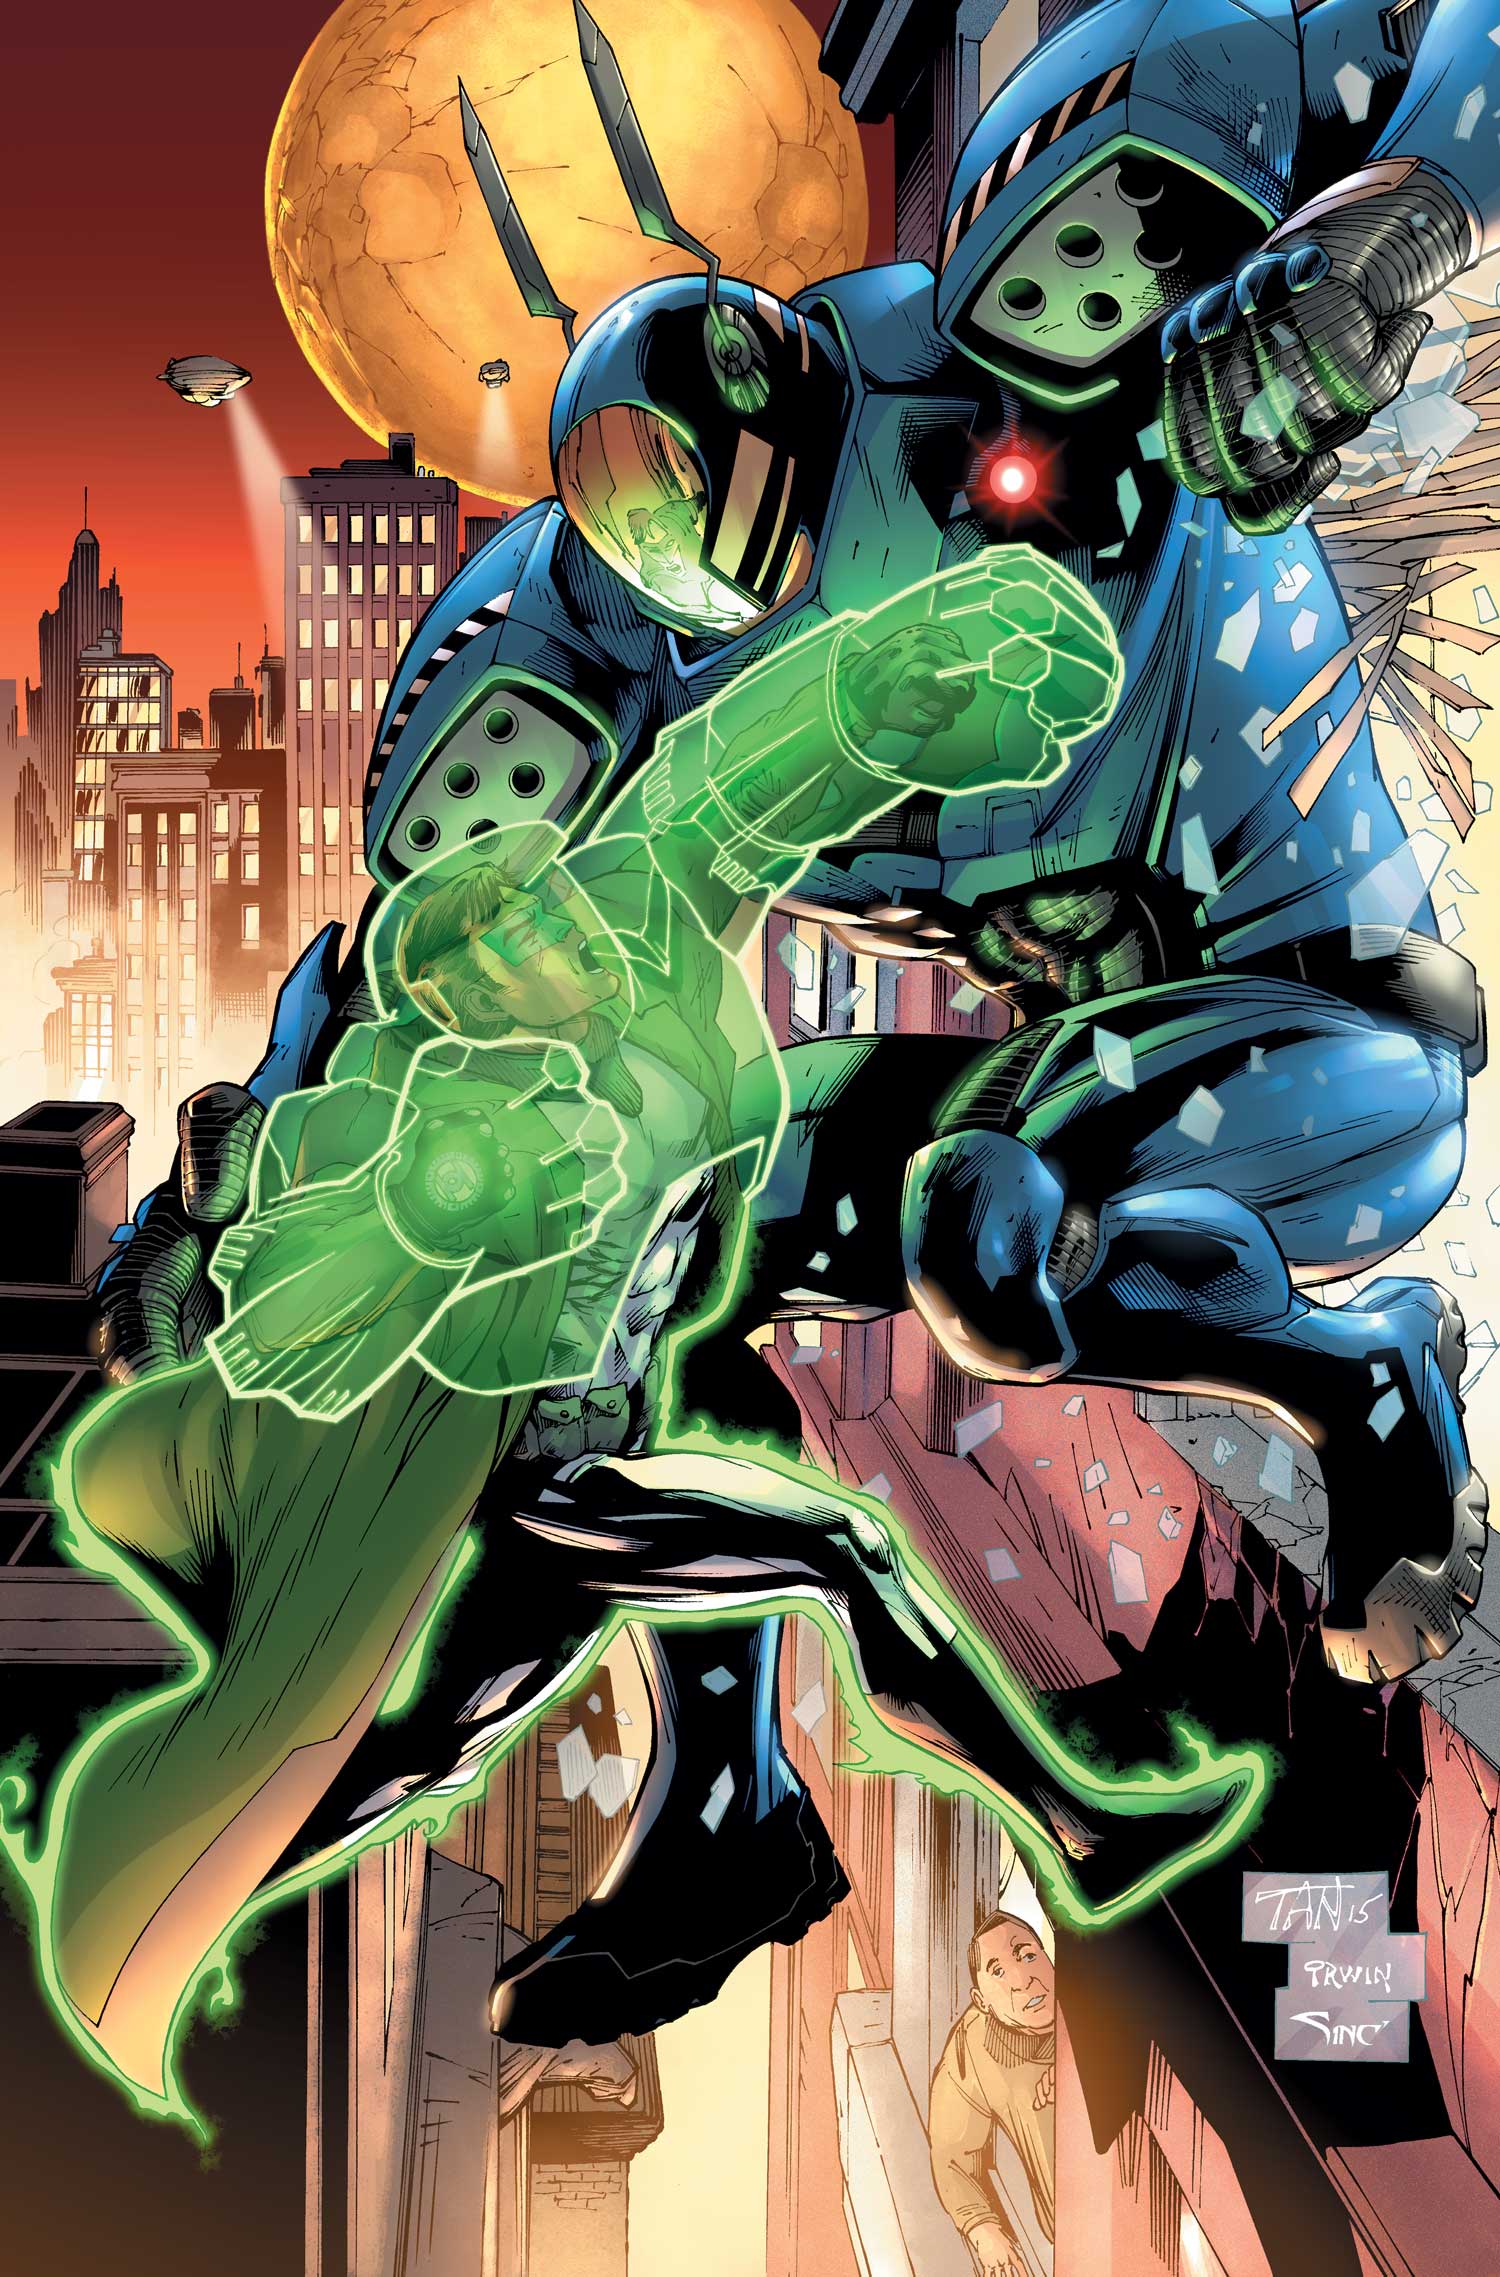 Green Lantern Vol 5 48